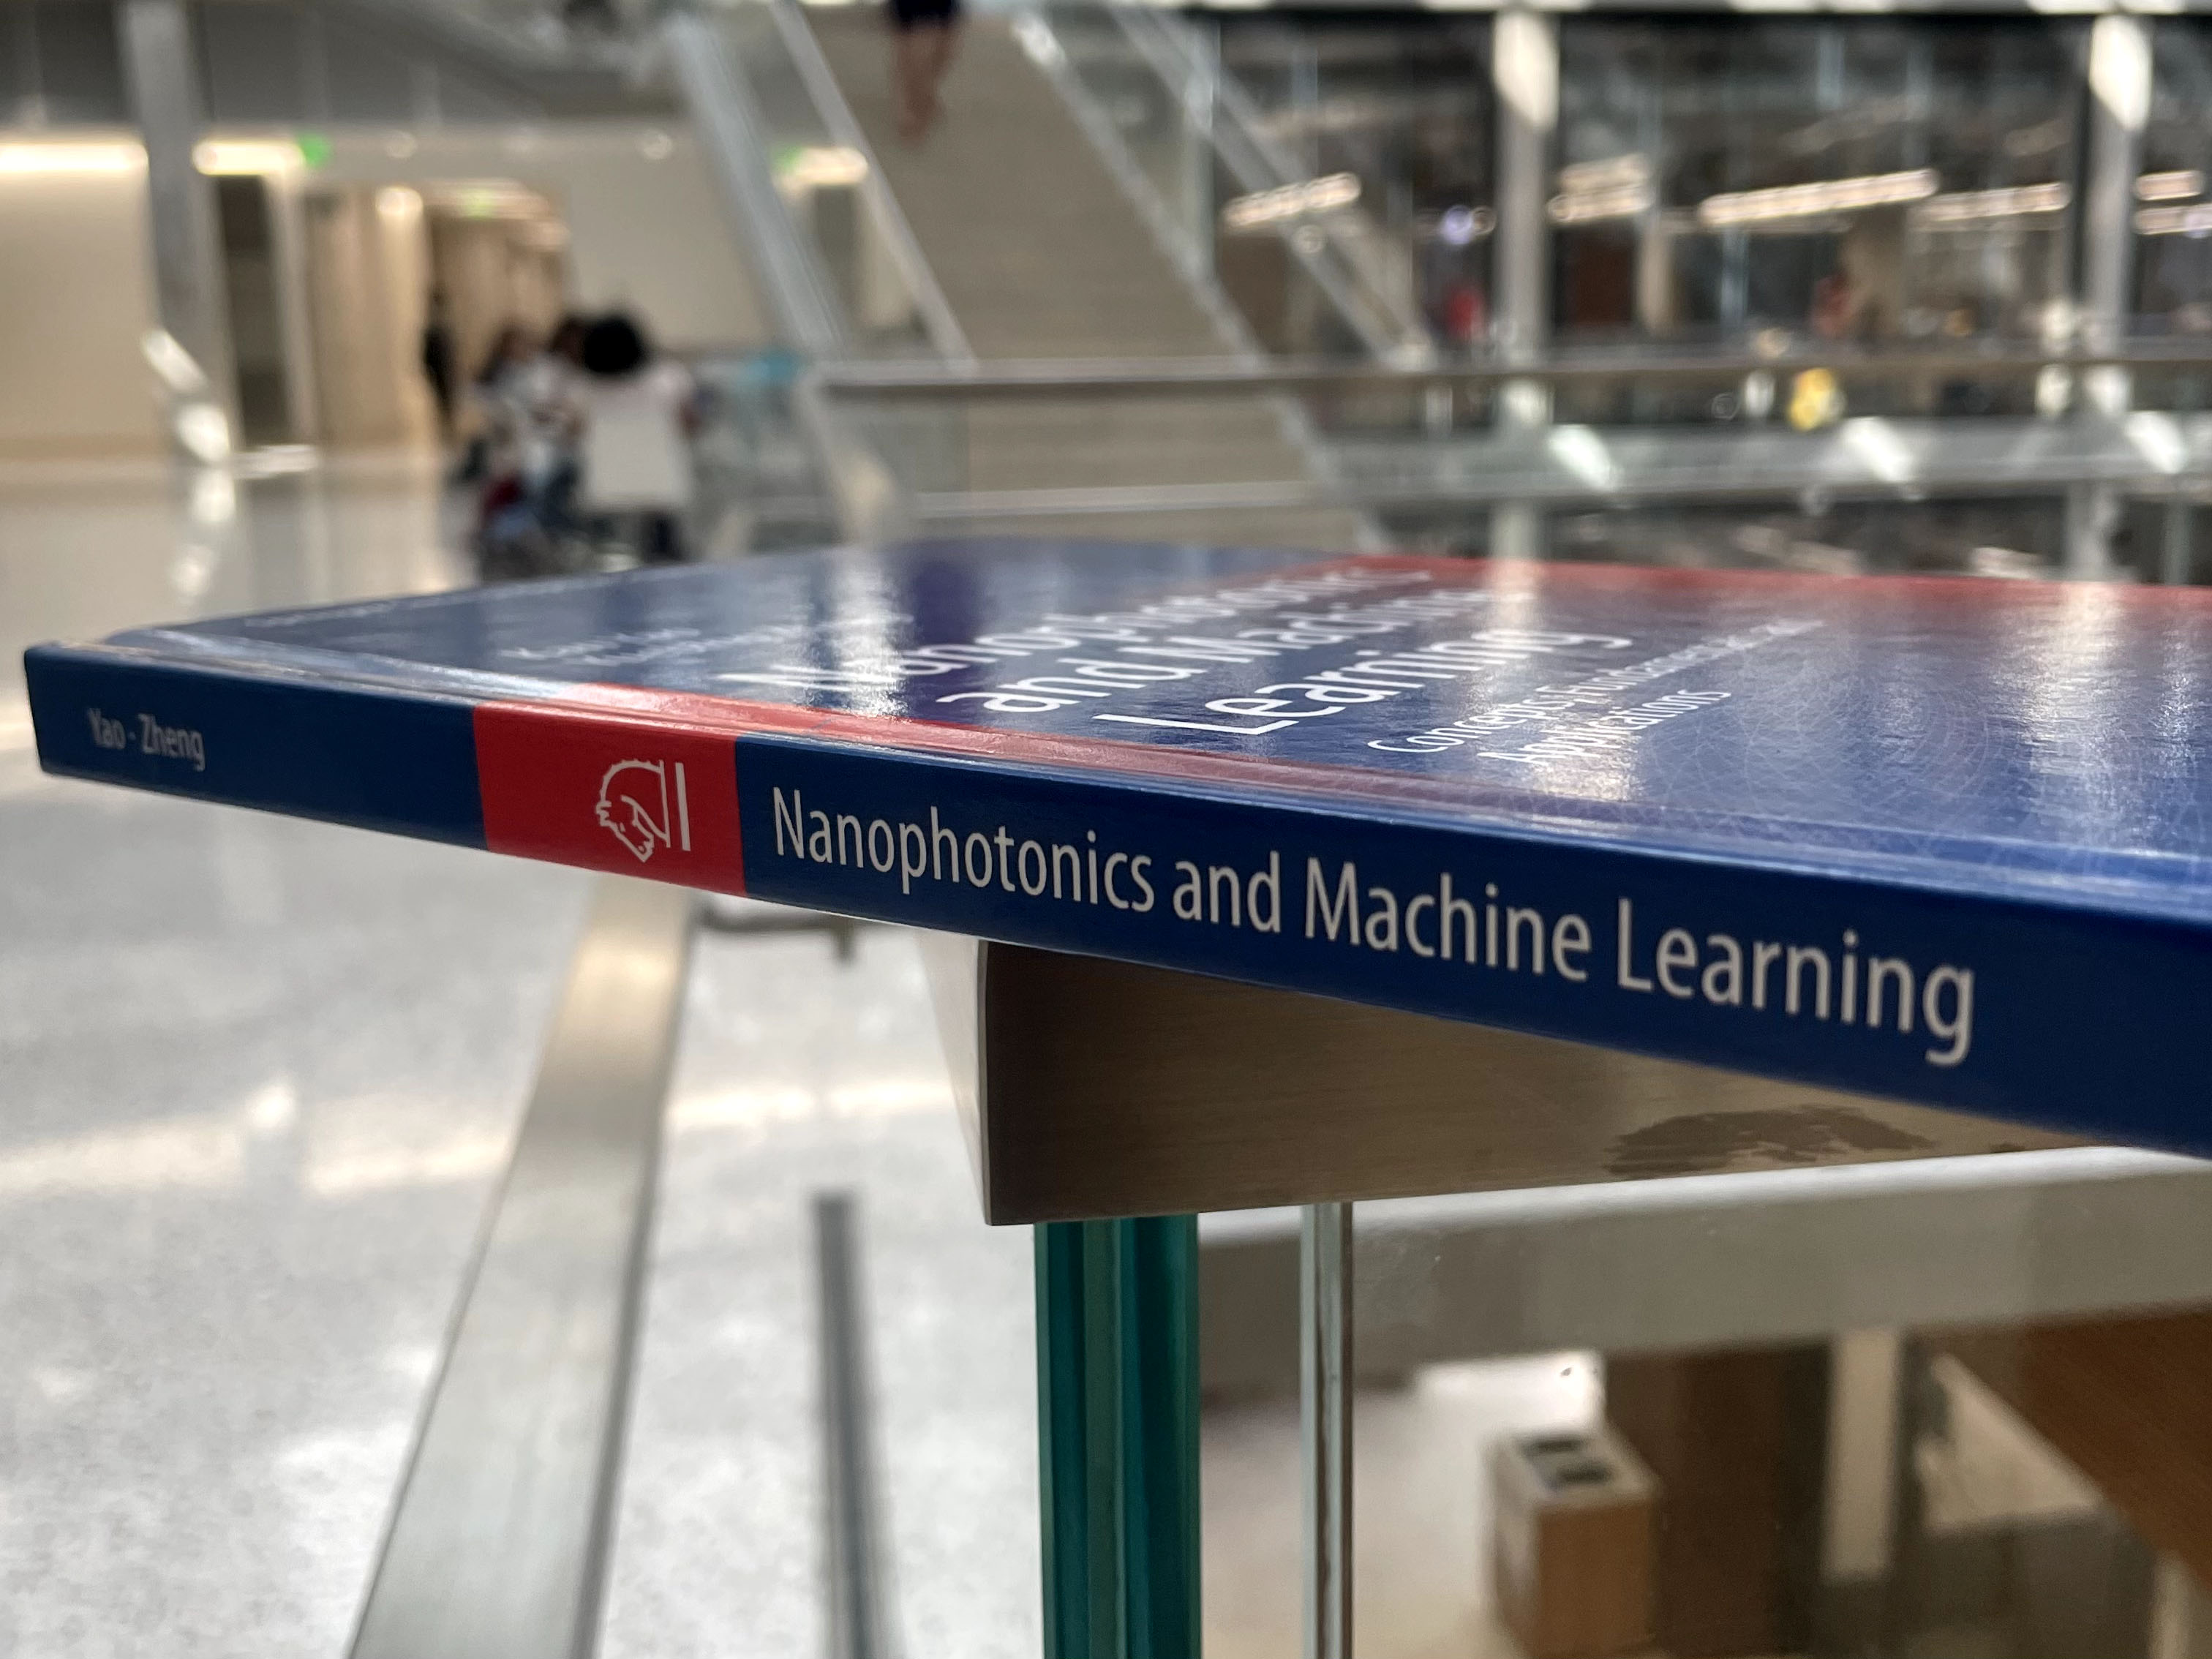 Nanophotonics and Machine Learning book balanced on a guardrail